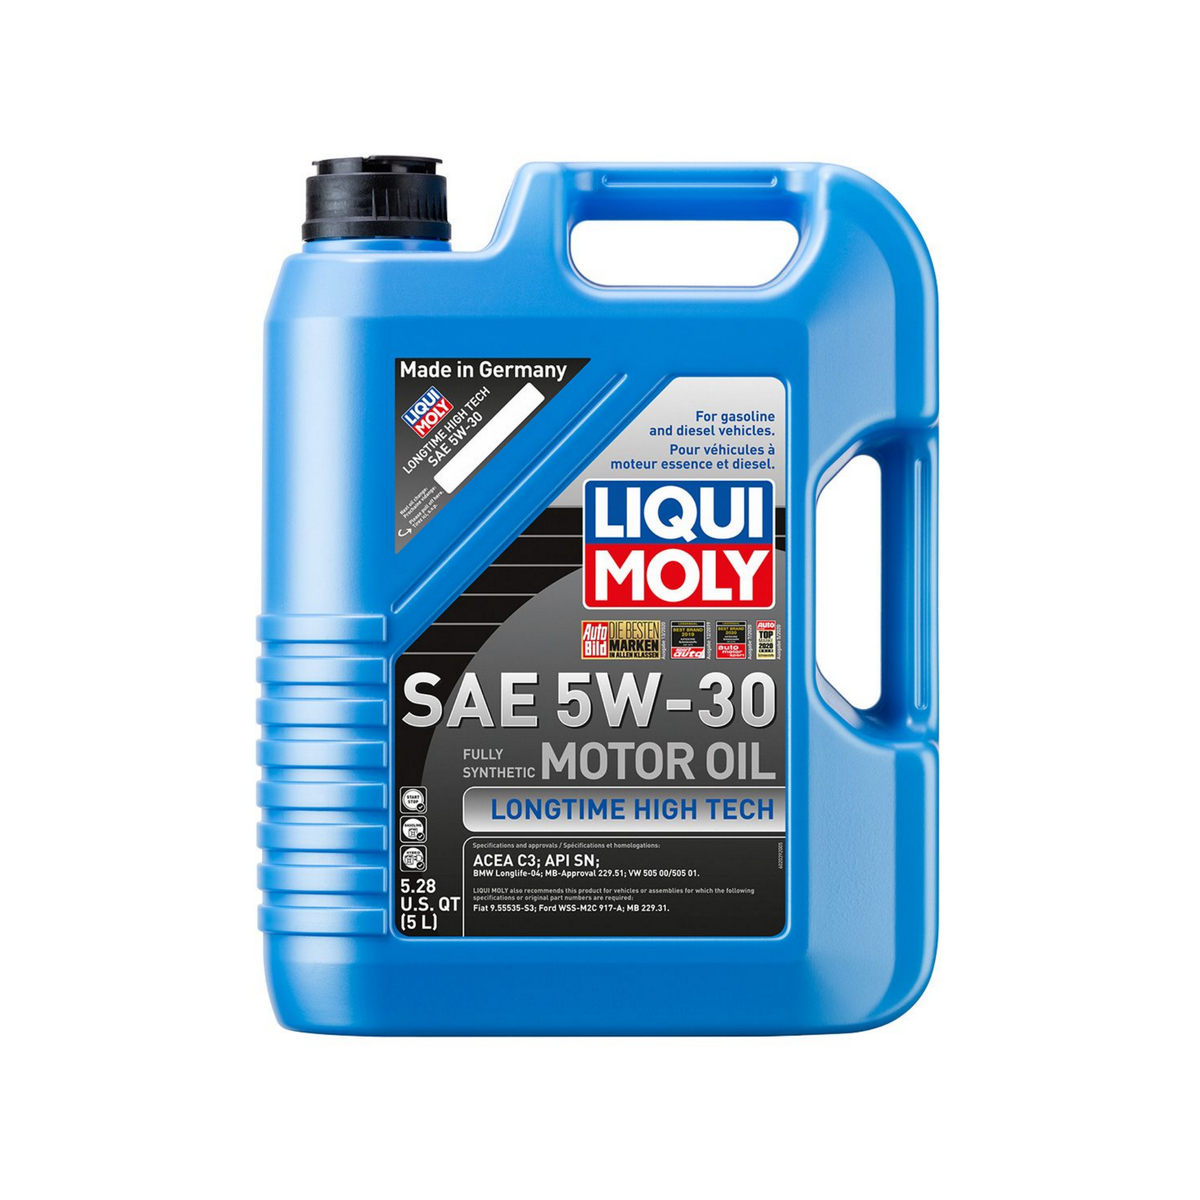 Liqui Moly Fully Synthetic Longtime High Tech 5W-30 Motor Oil - 1 Lite –  FSWERKS